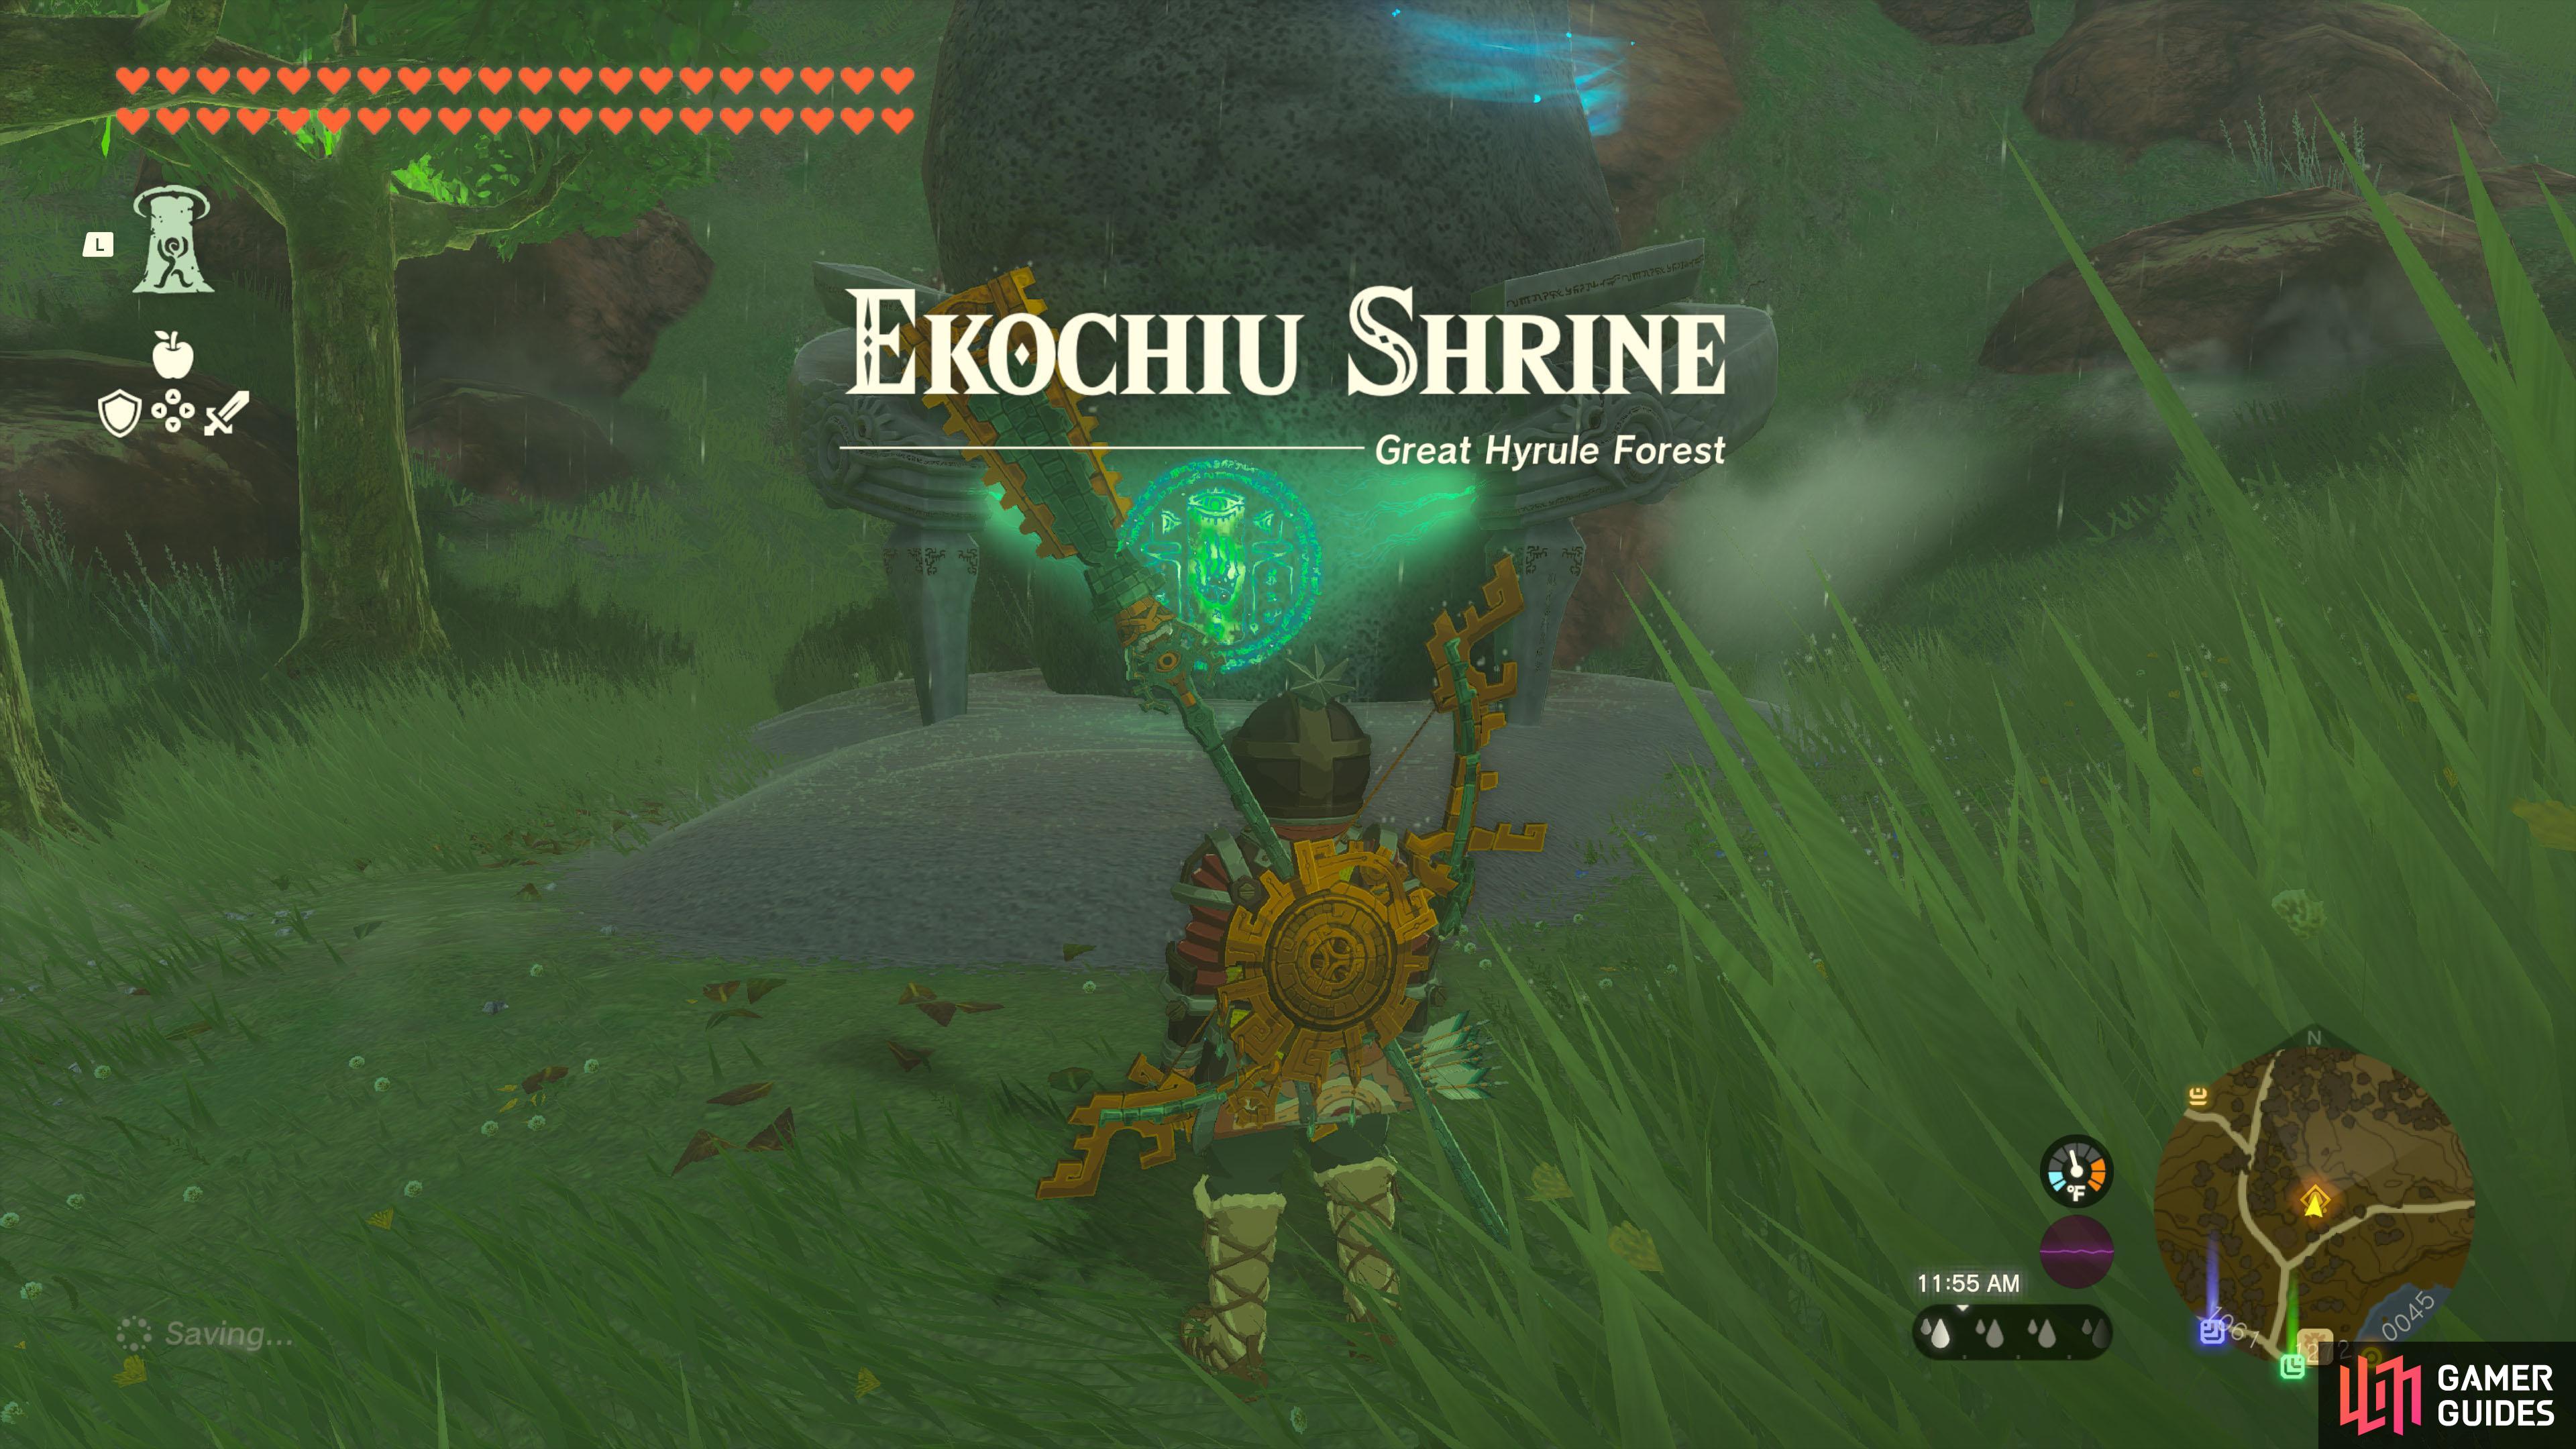 The !Ekochiu Shrine entrance